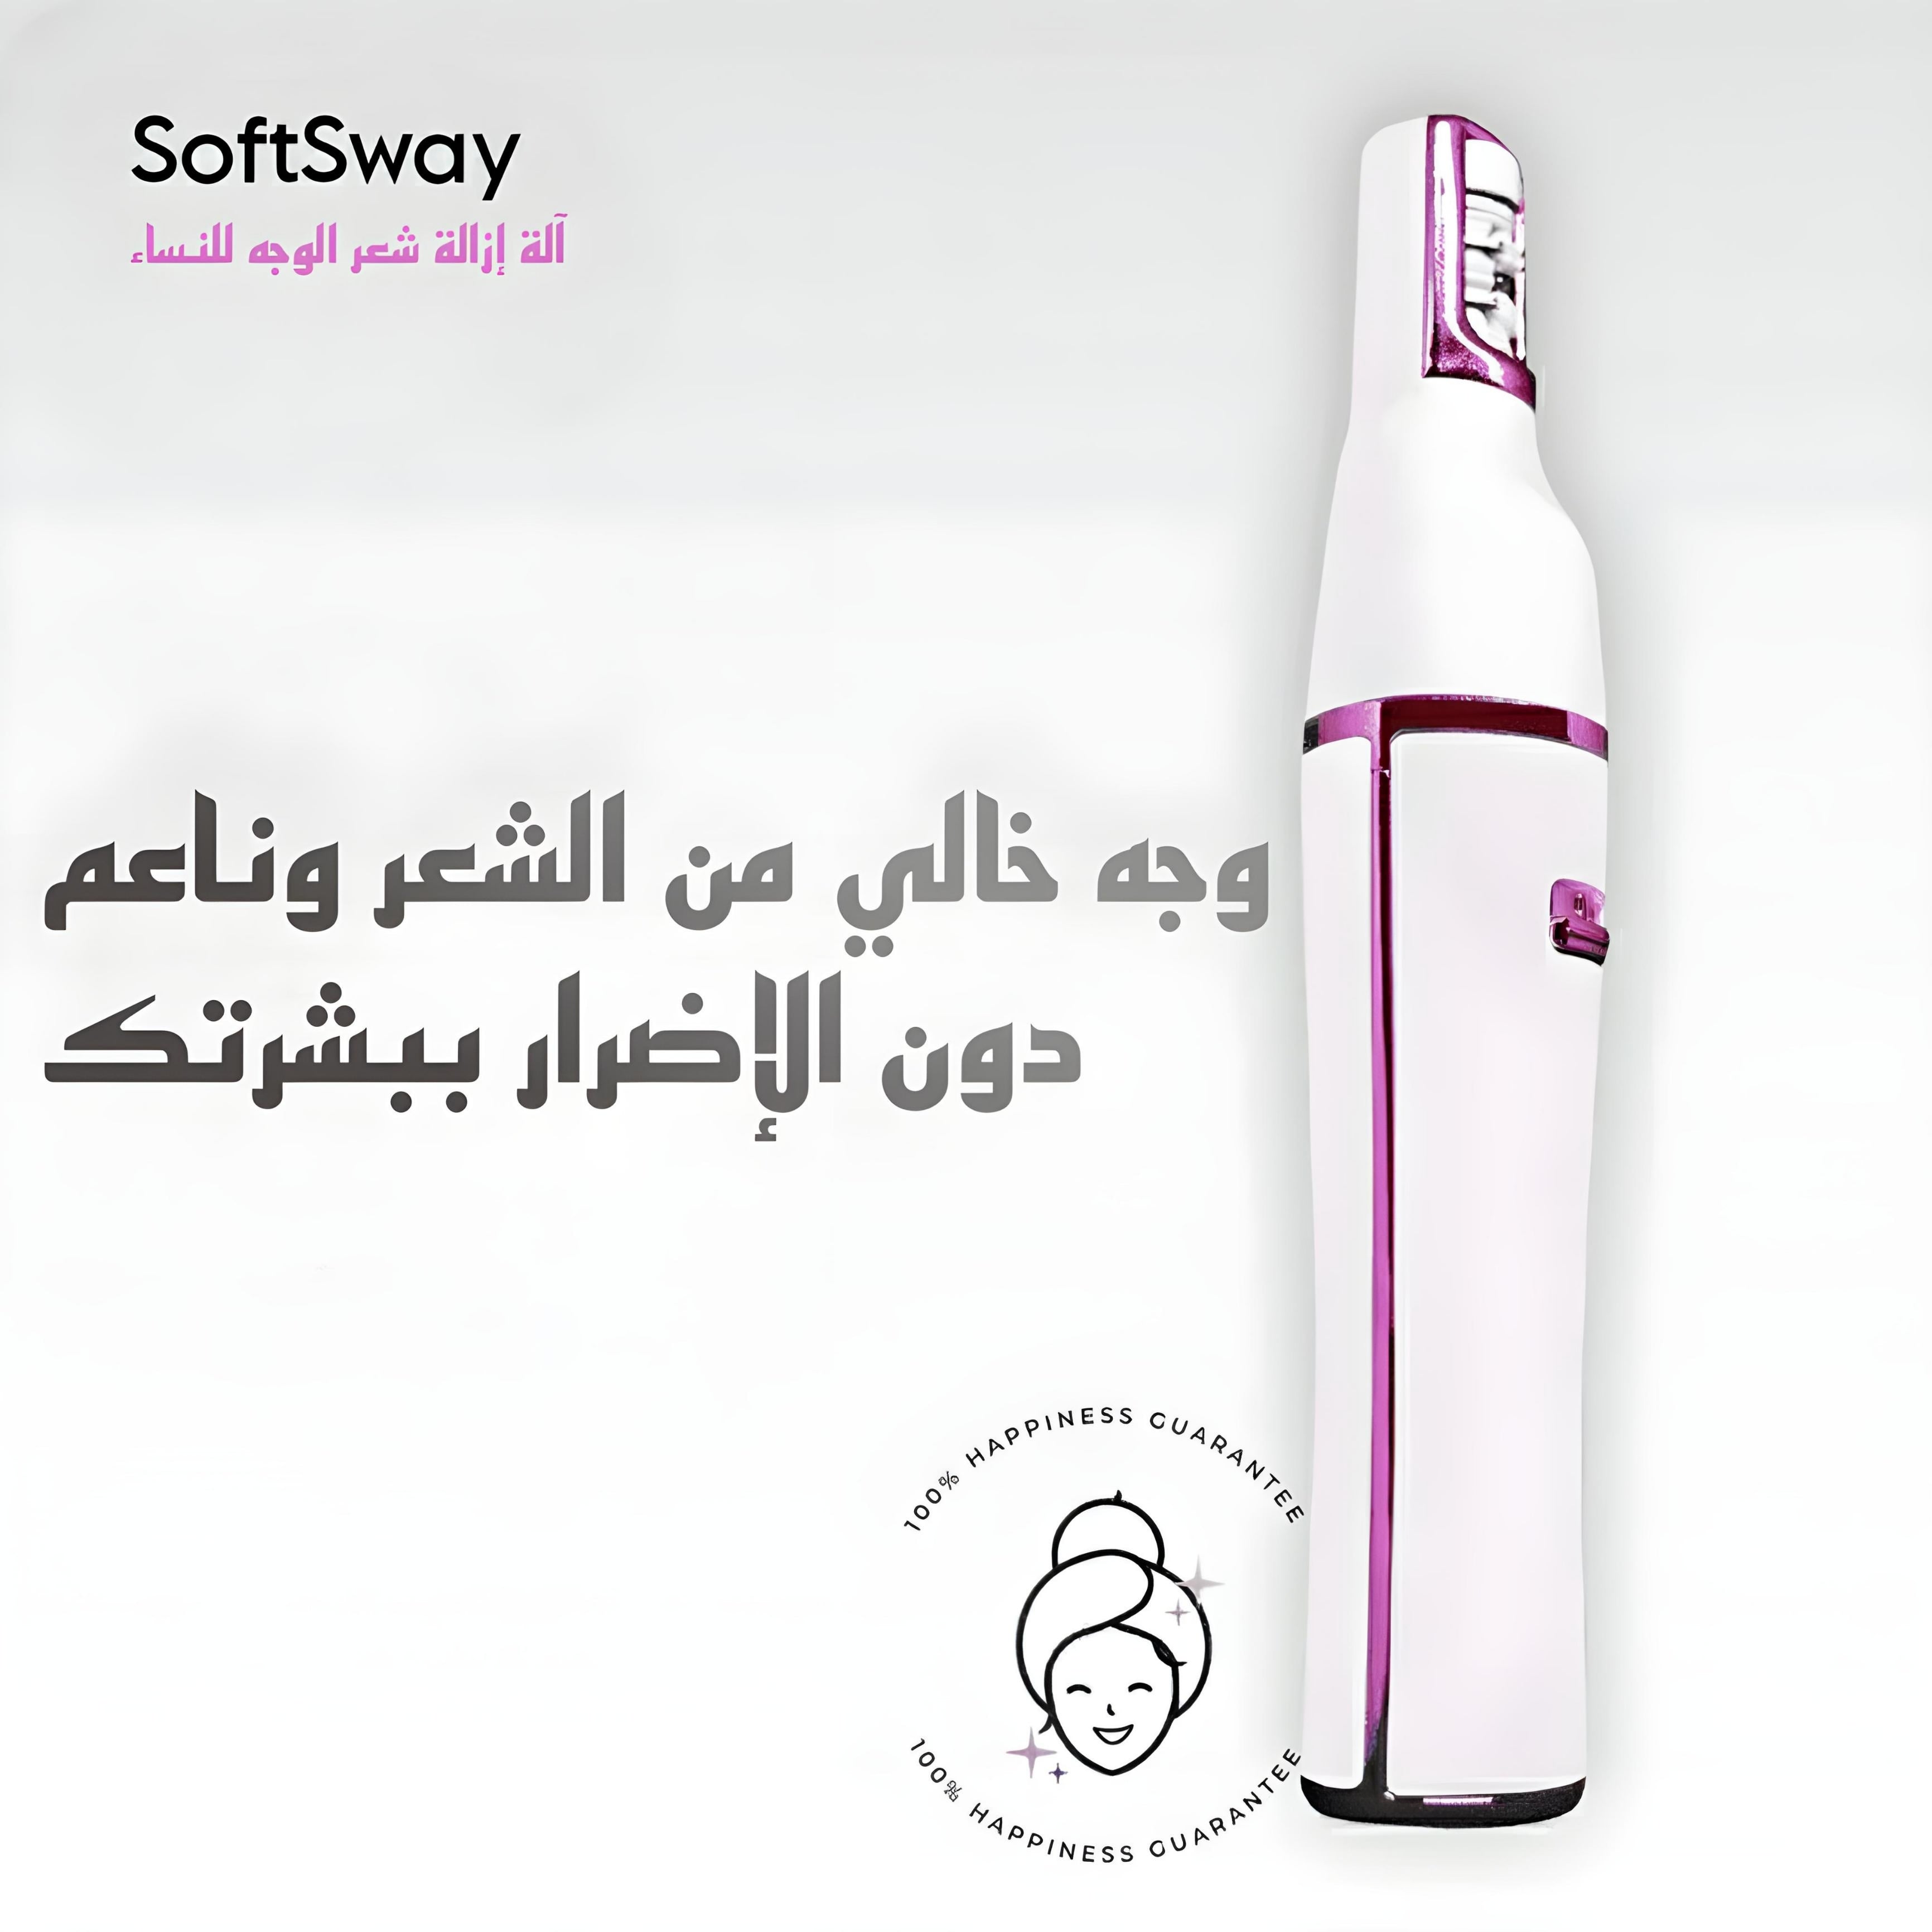 SoftSway